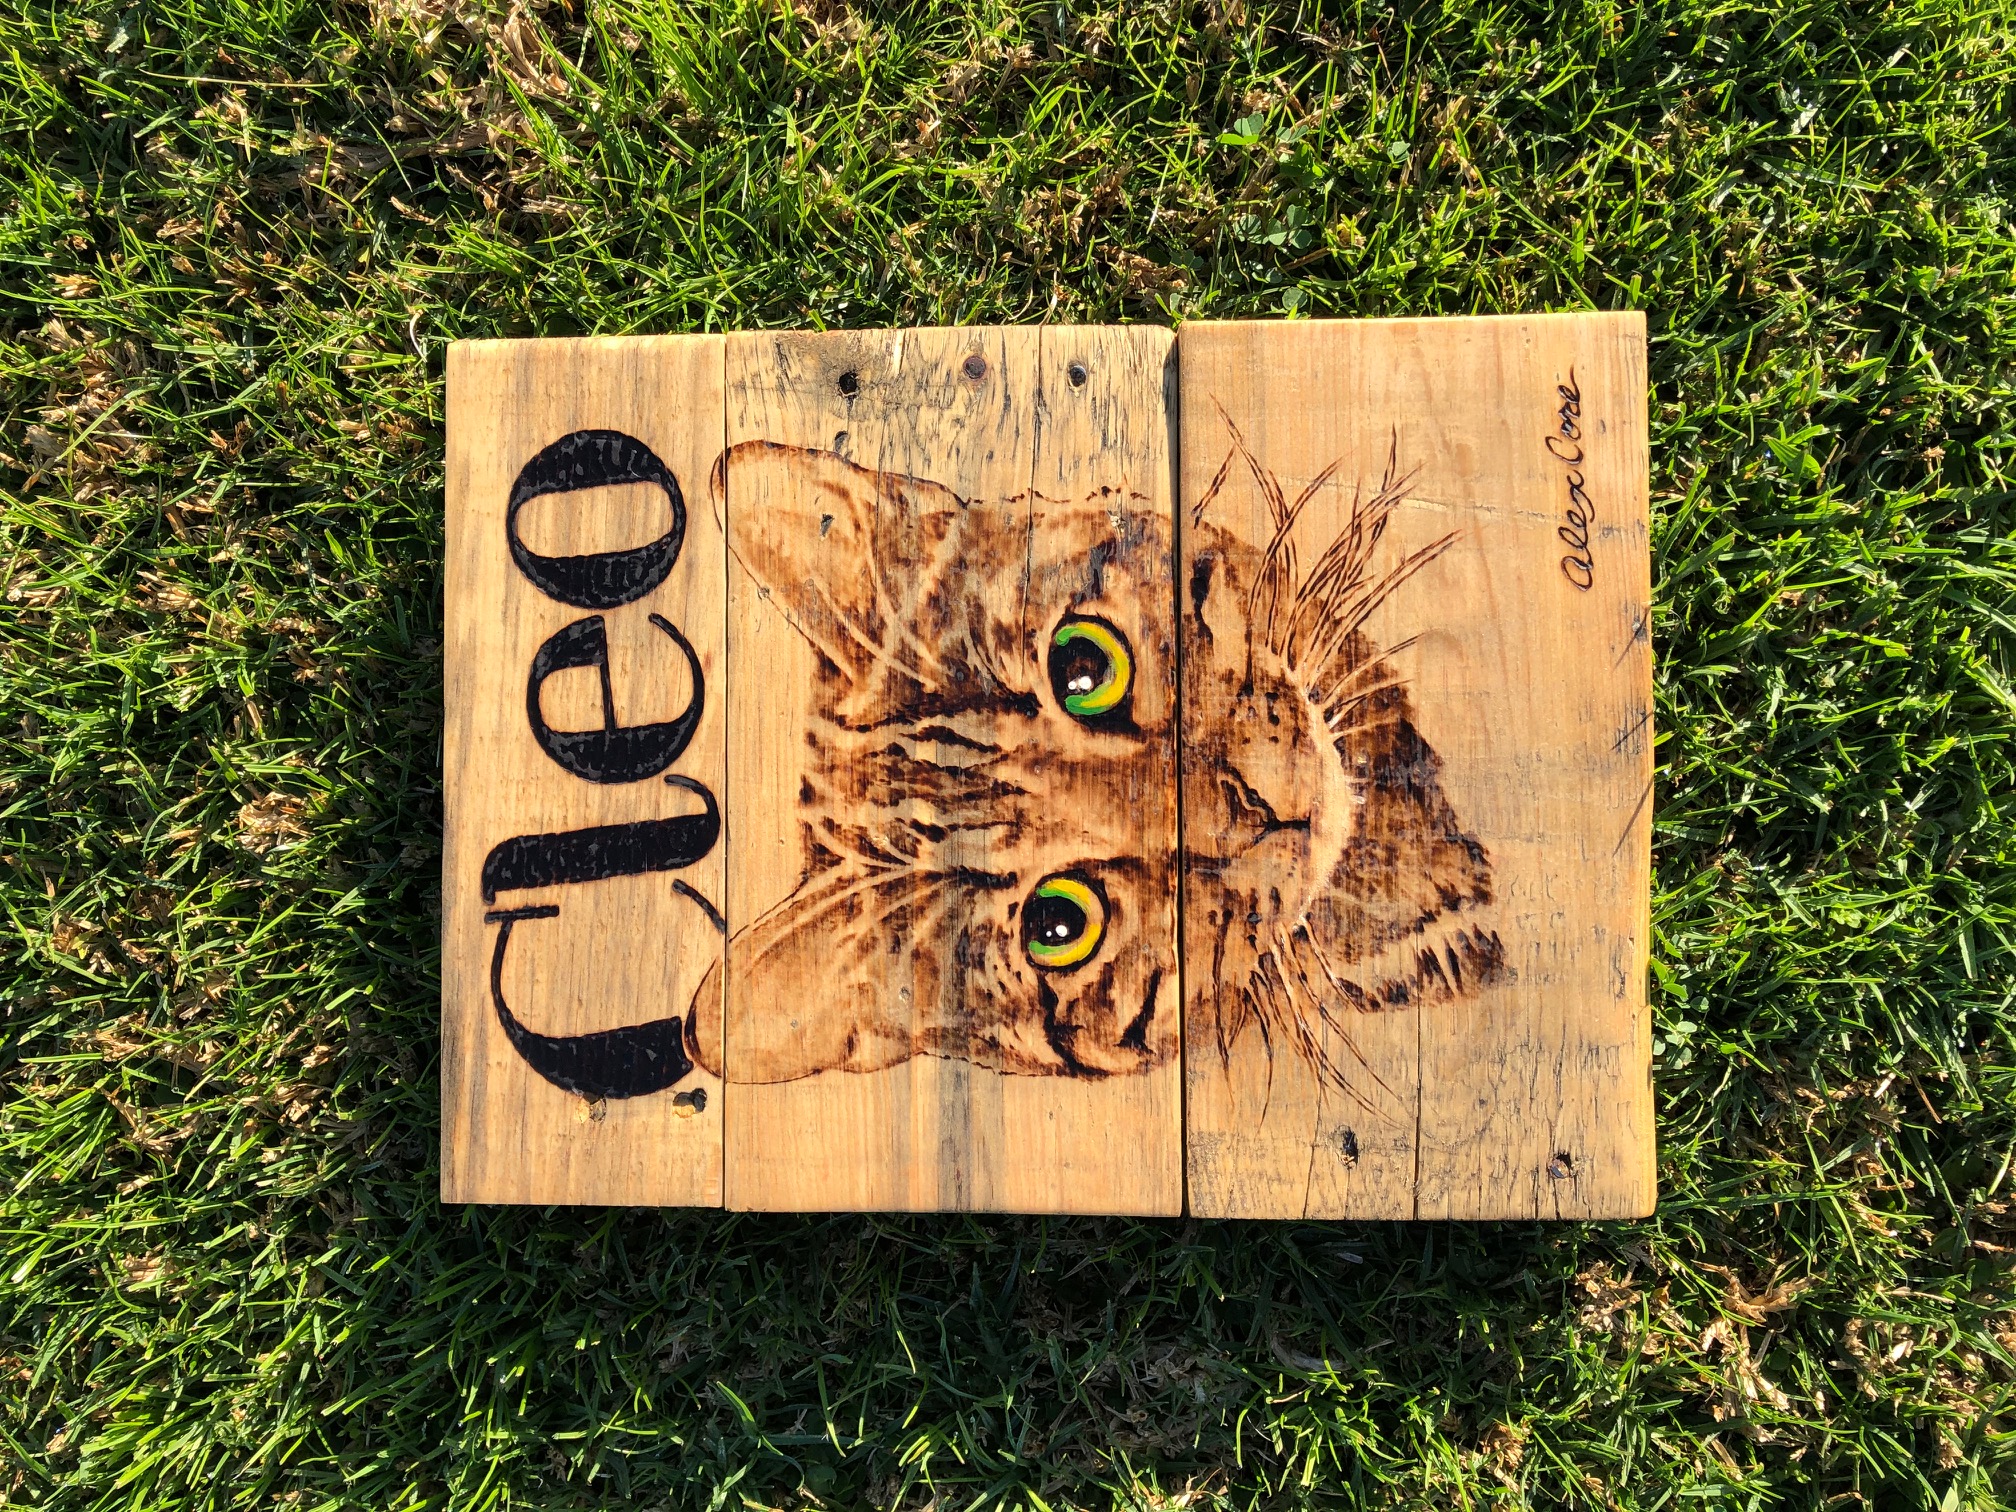 A kitty named Cleo